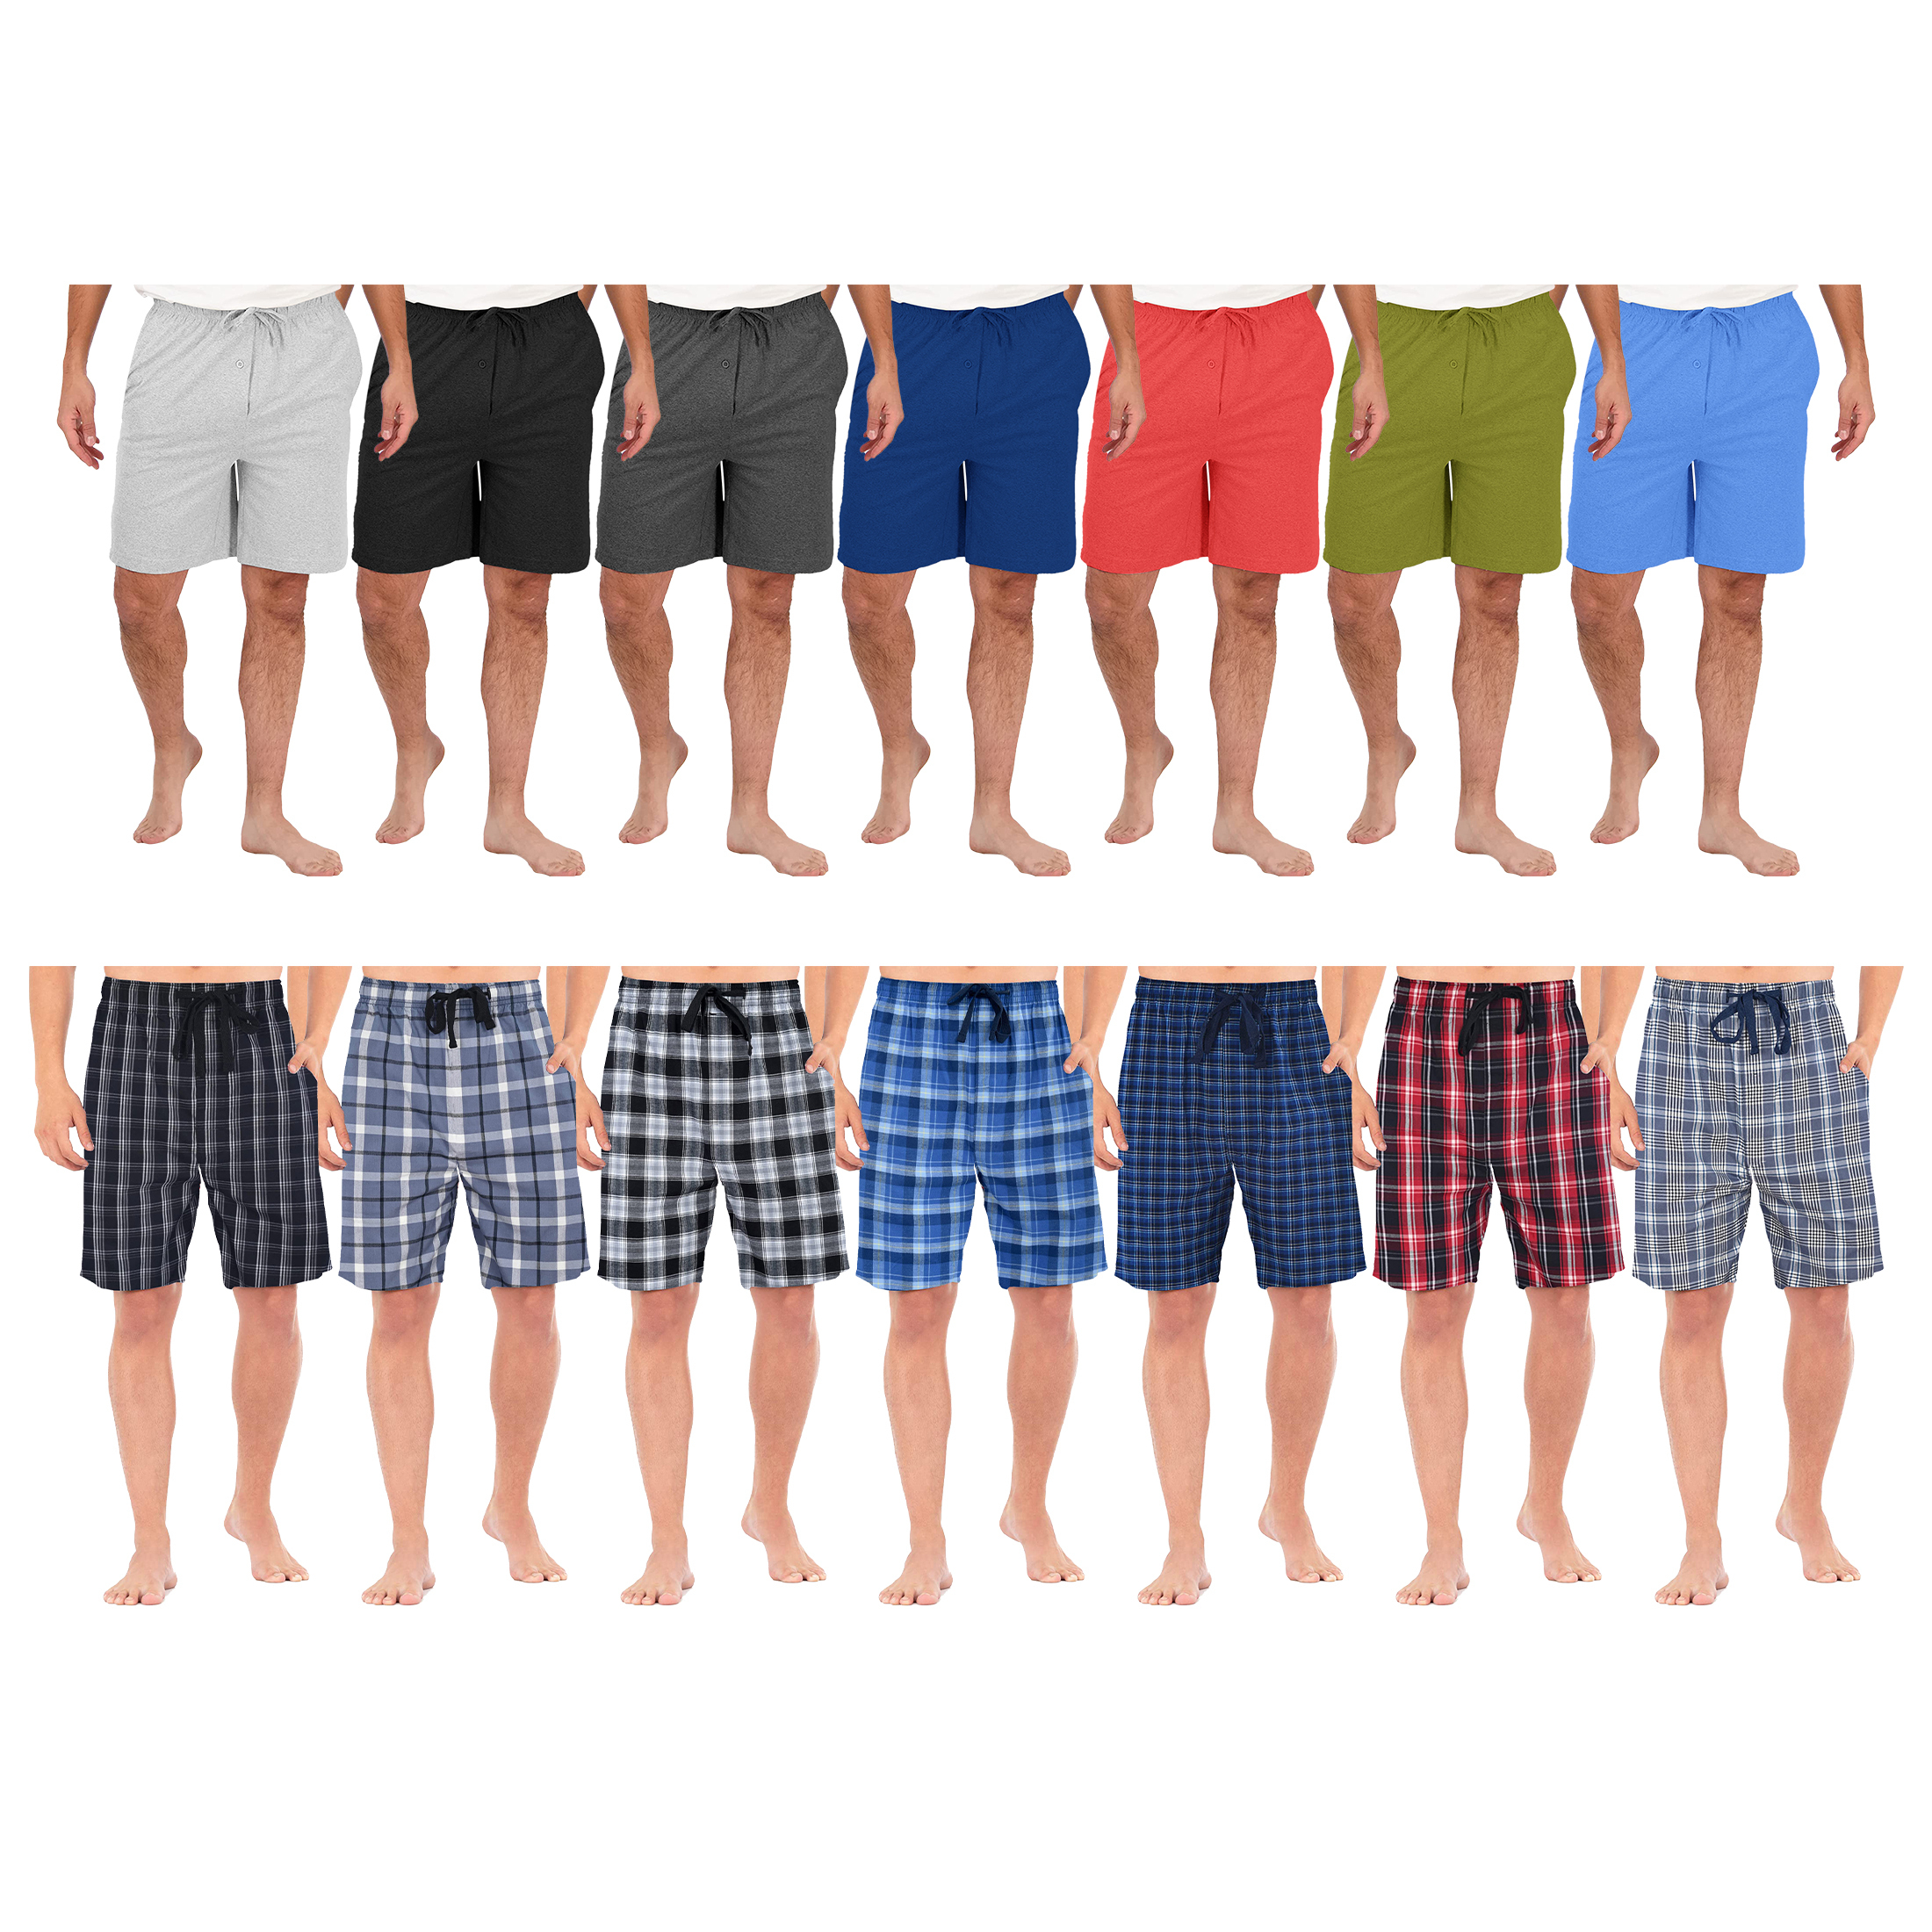 Multi-Pack: Men's Ultra-Soft Jersey Knit Sleep Lounge Pajama Shorts For Sleepwear - Plaid, 1 Pack, X-Large